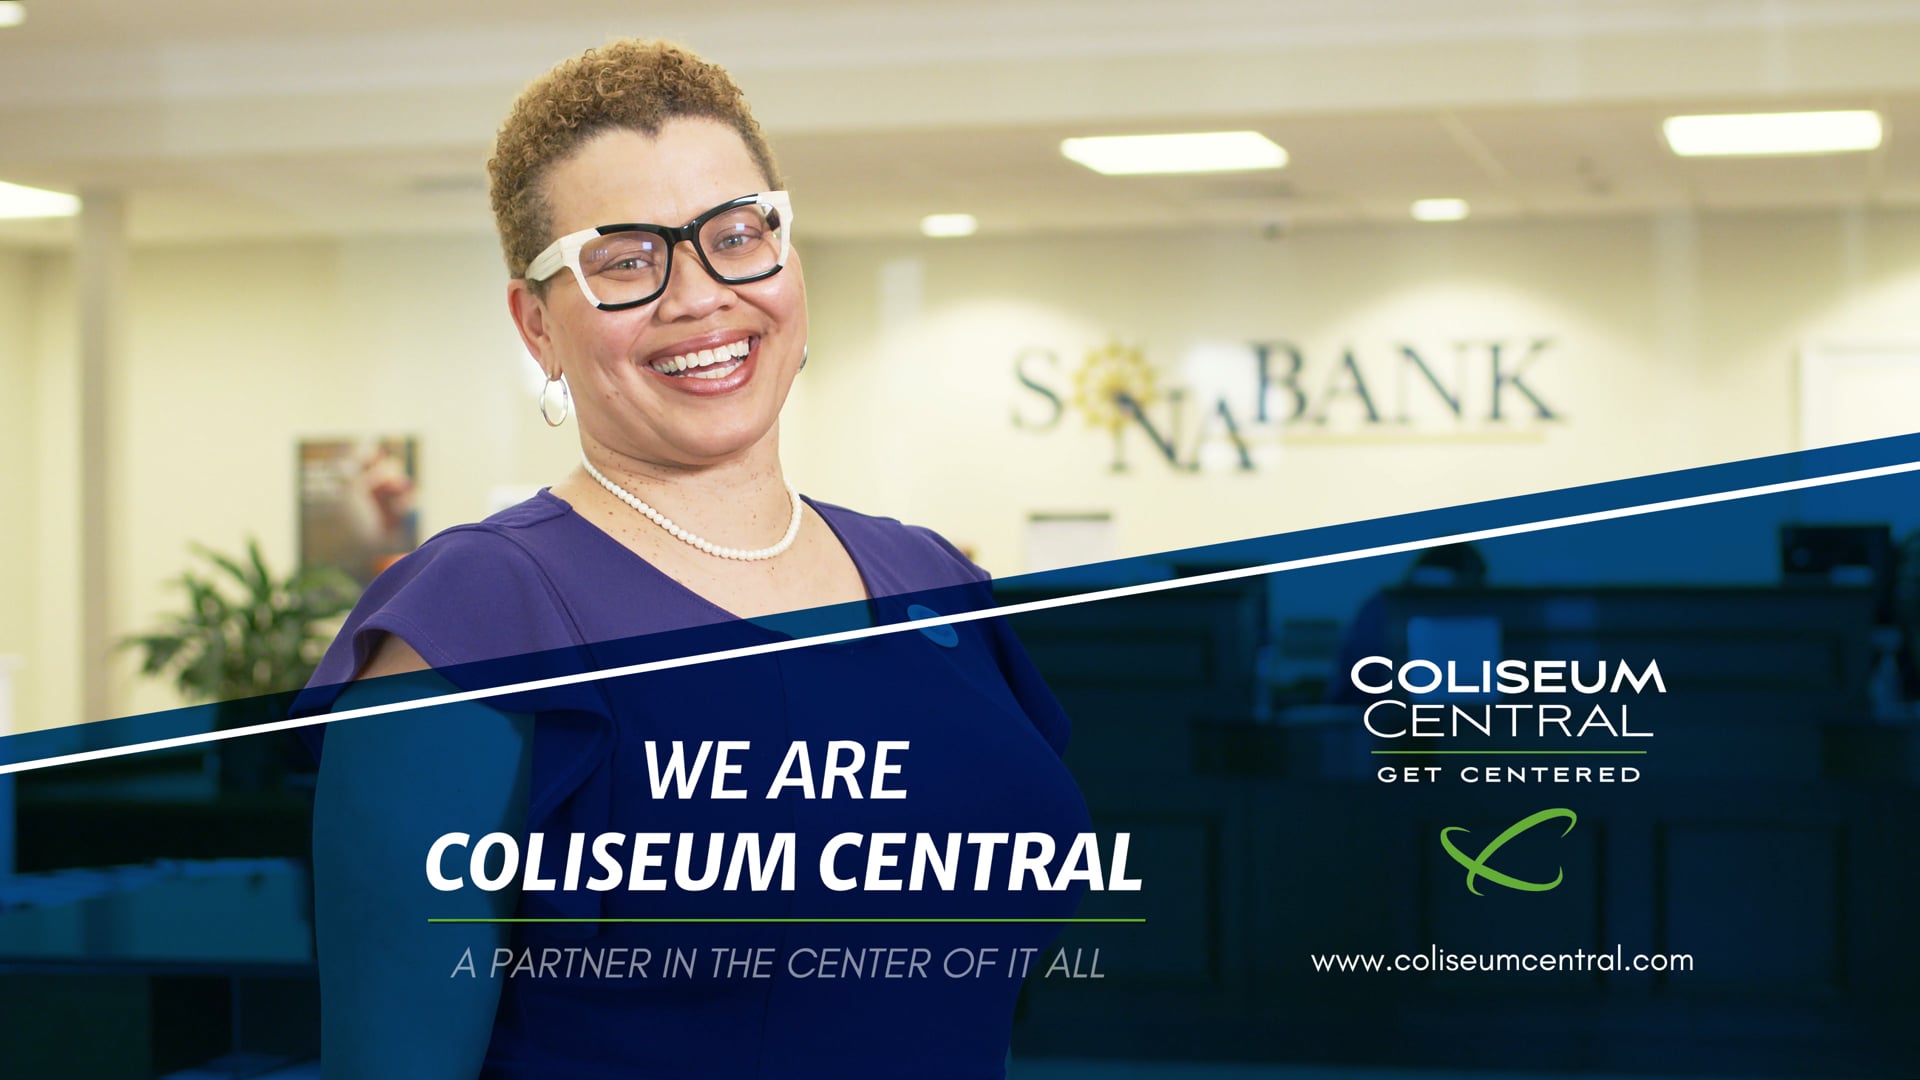 We Are Coliseum Central - Sonabank - Sonya Daniels